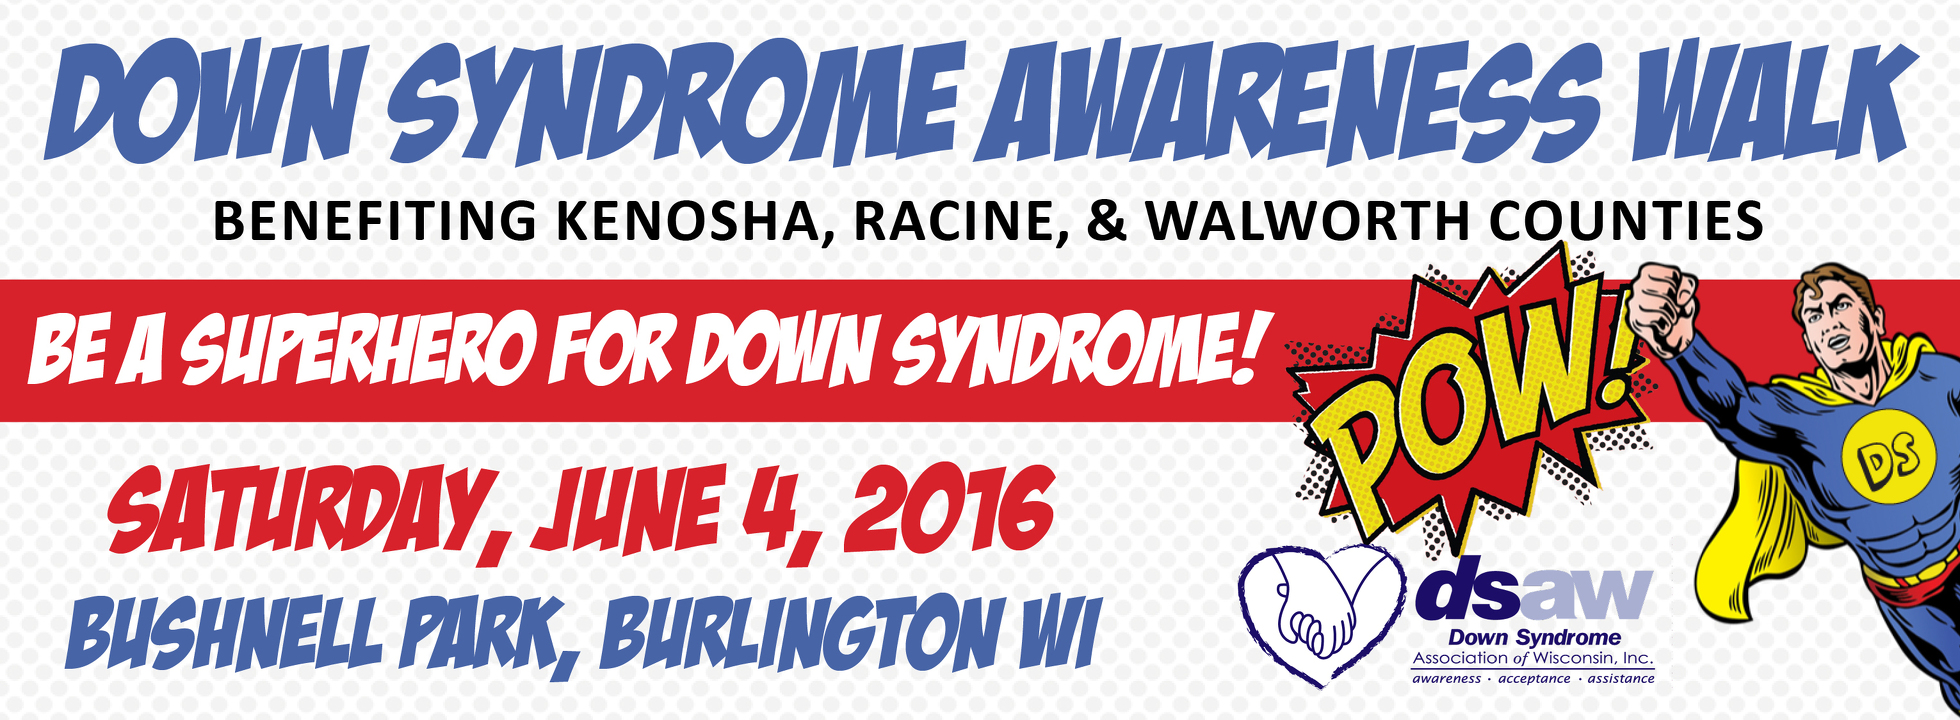 3rd Annual Down Syndrome Awareness Walk benefiting Kenosha, Racine, & Walworth Counties